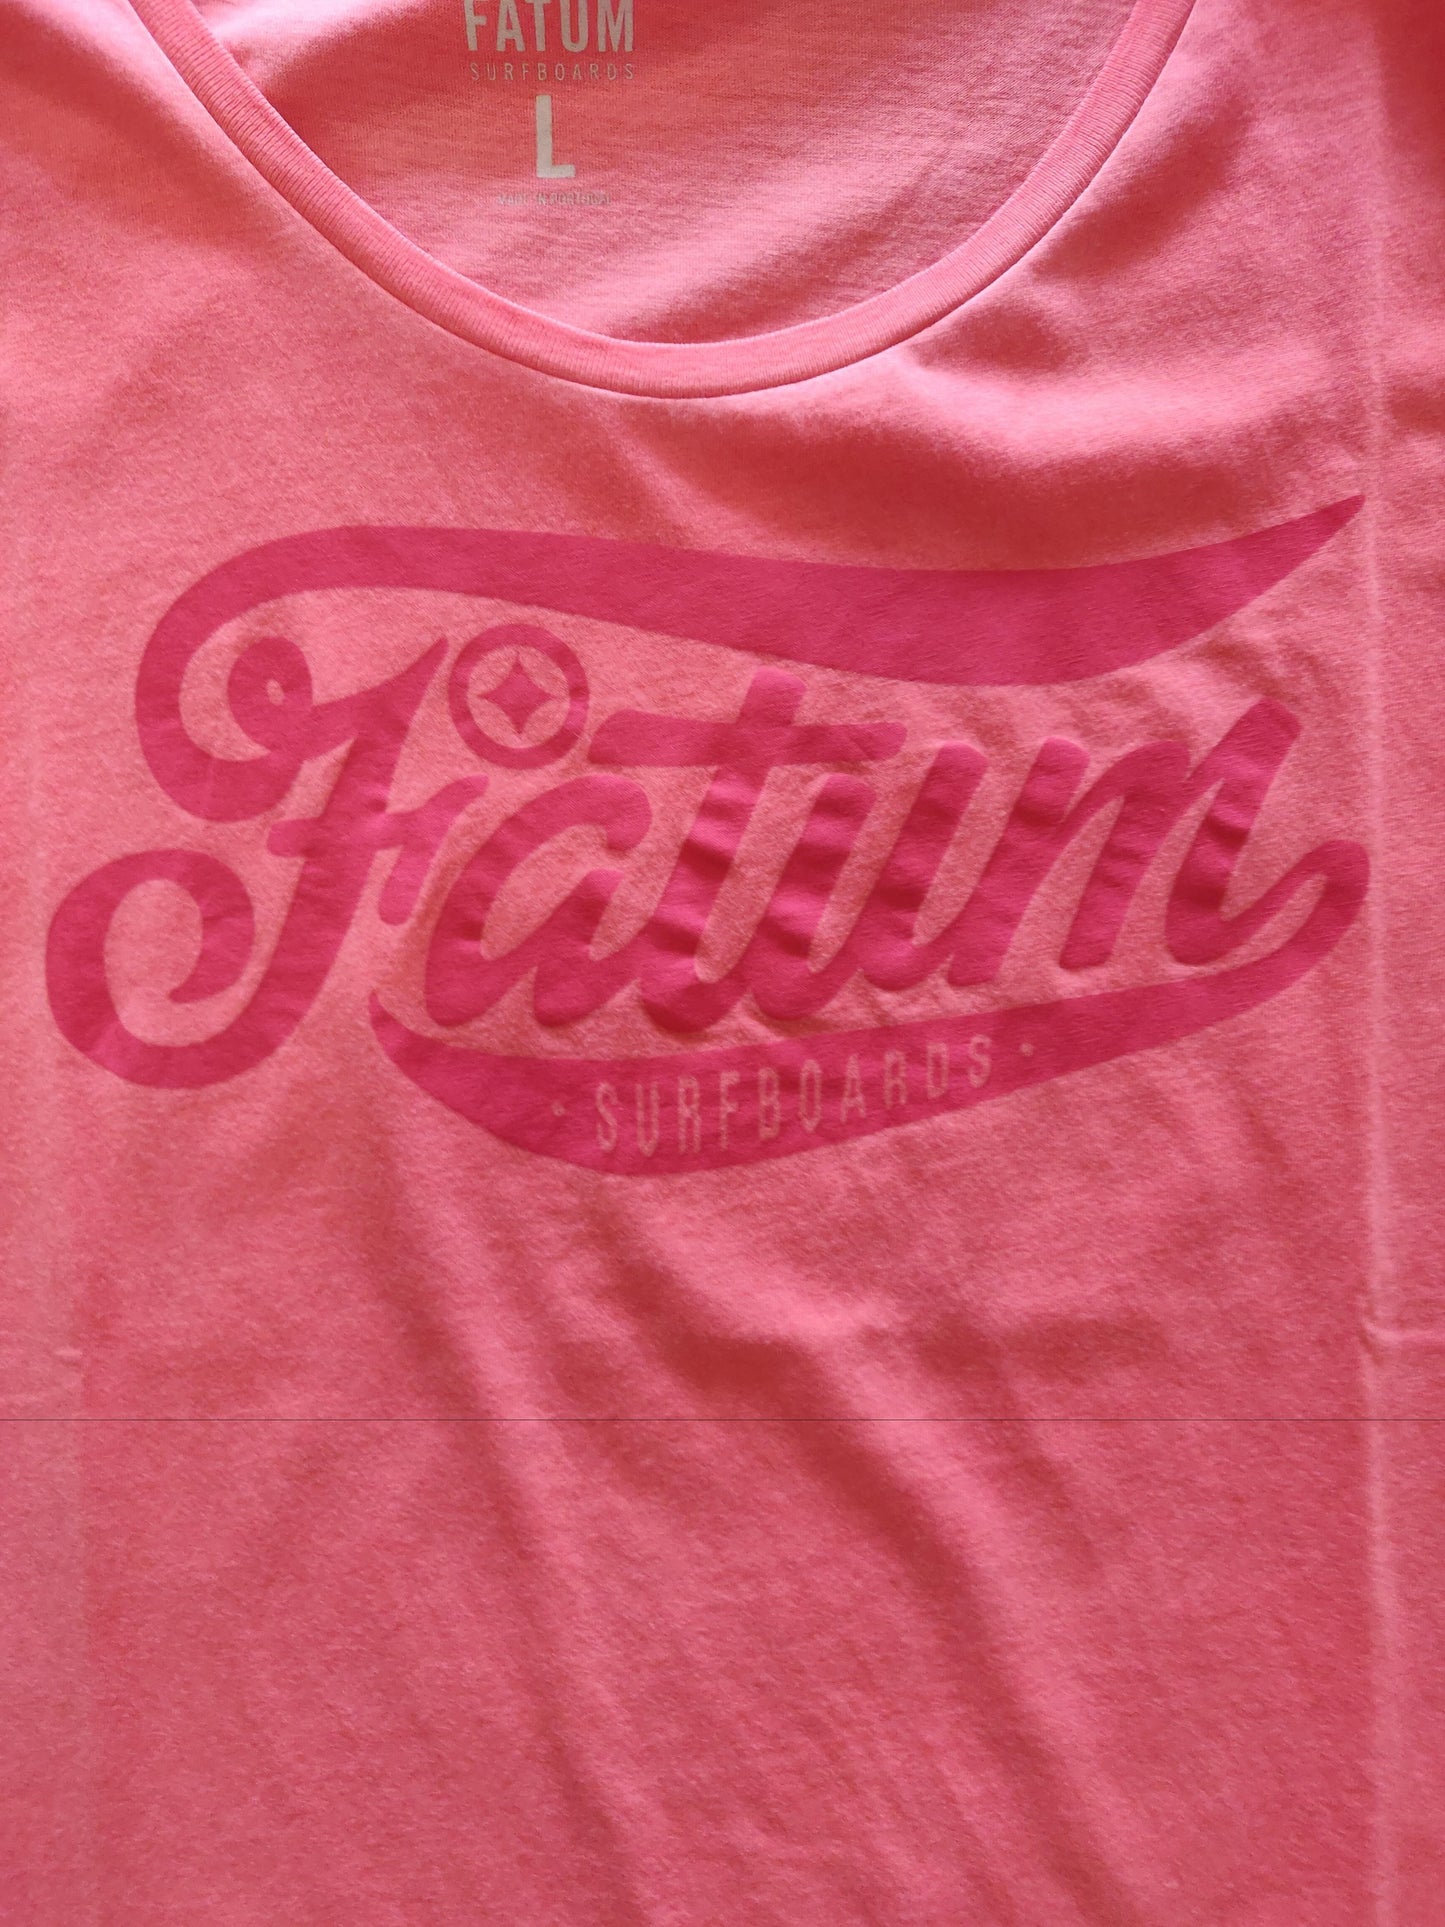 Fatum Ladies Settle - Pink